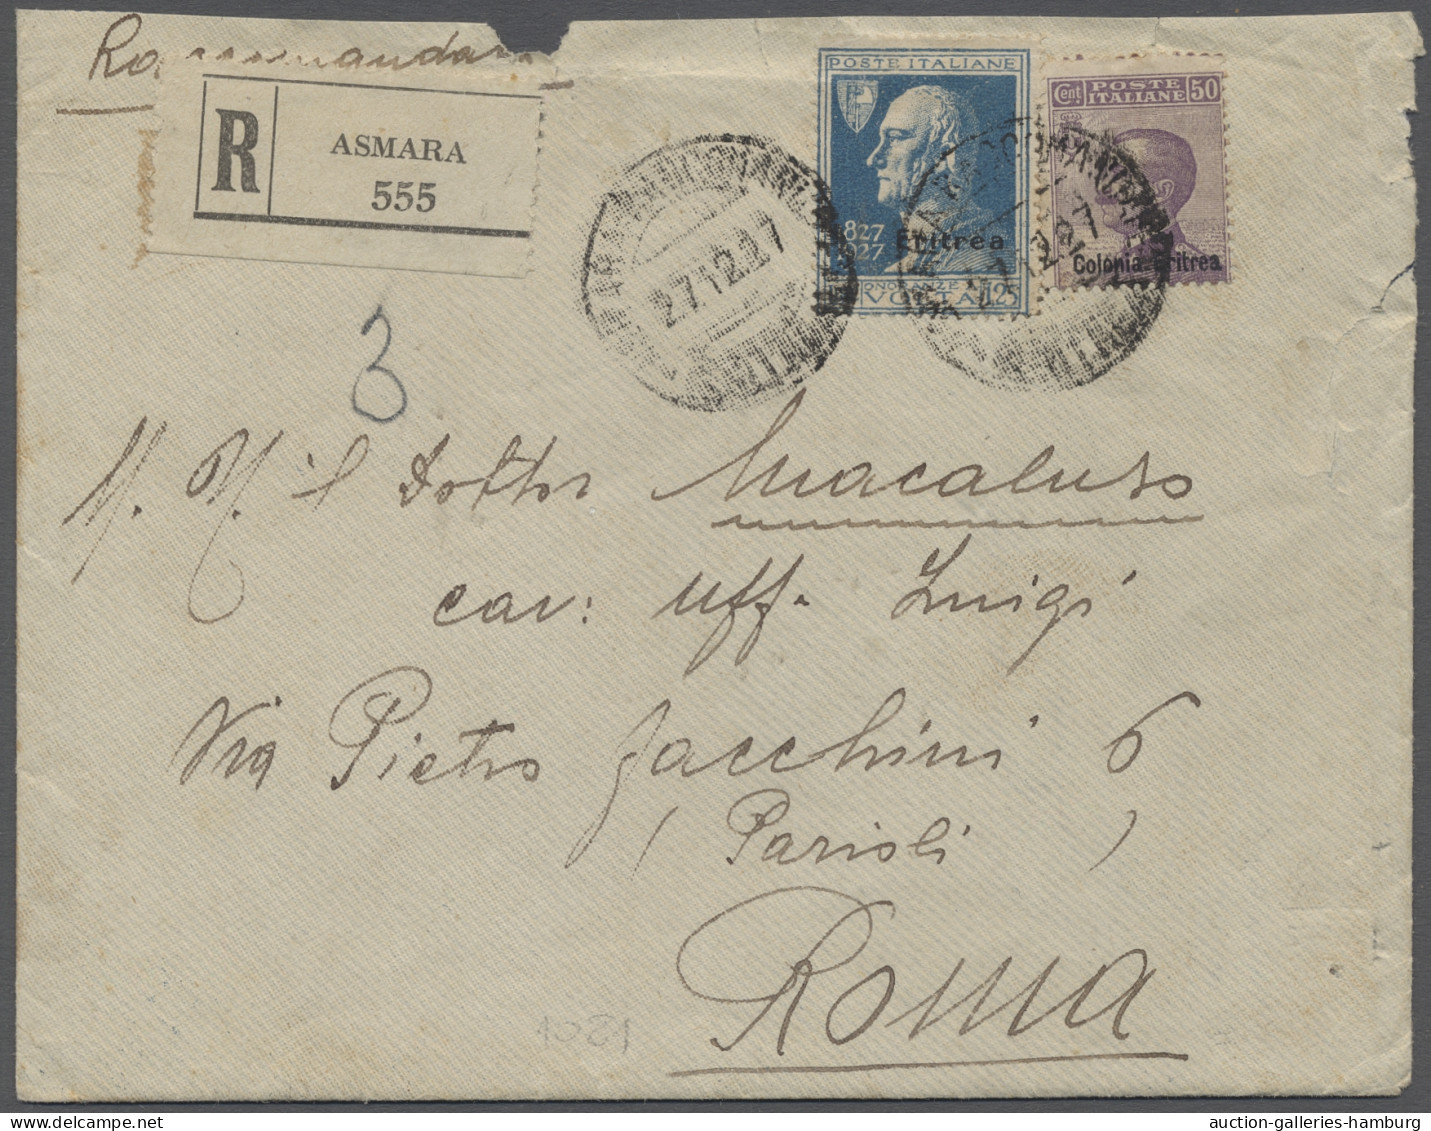 Italian Eritrea: 1927, Alessandro Volta, 1.25 L. Blau Mit Aufdruck "Eritrea" Und - Eritrea